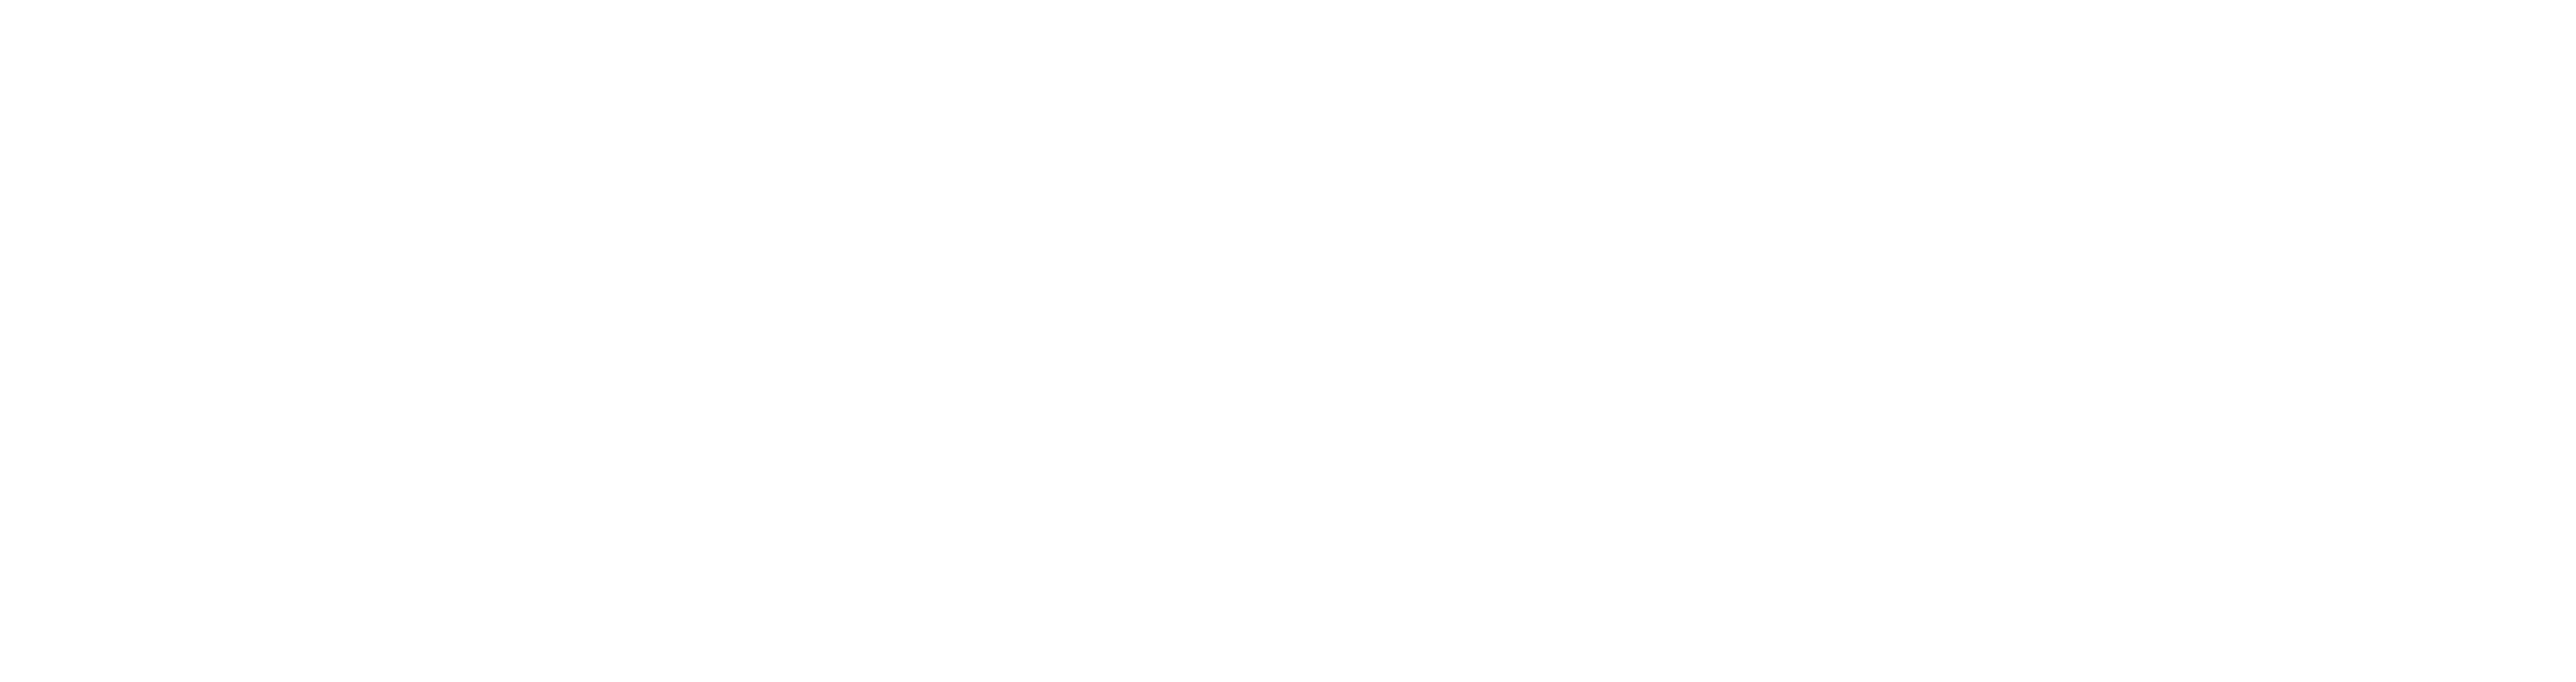 betterplace Logo